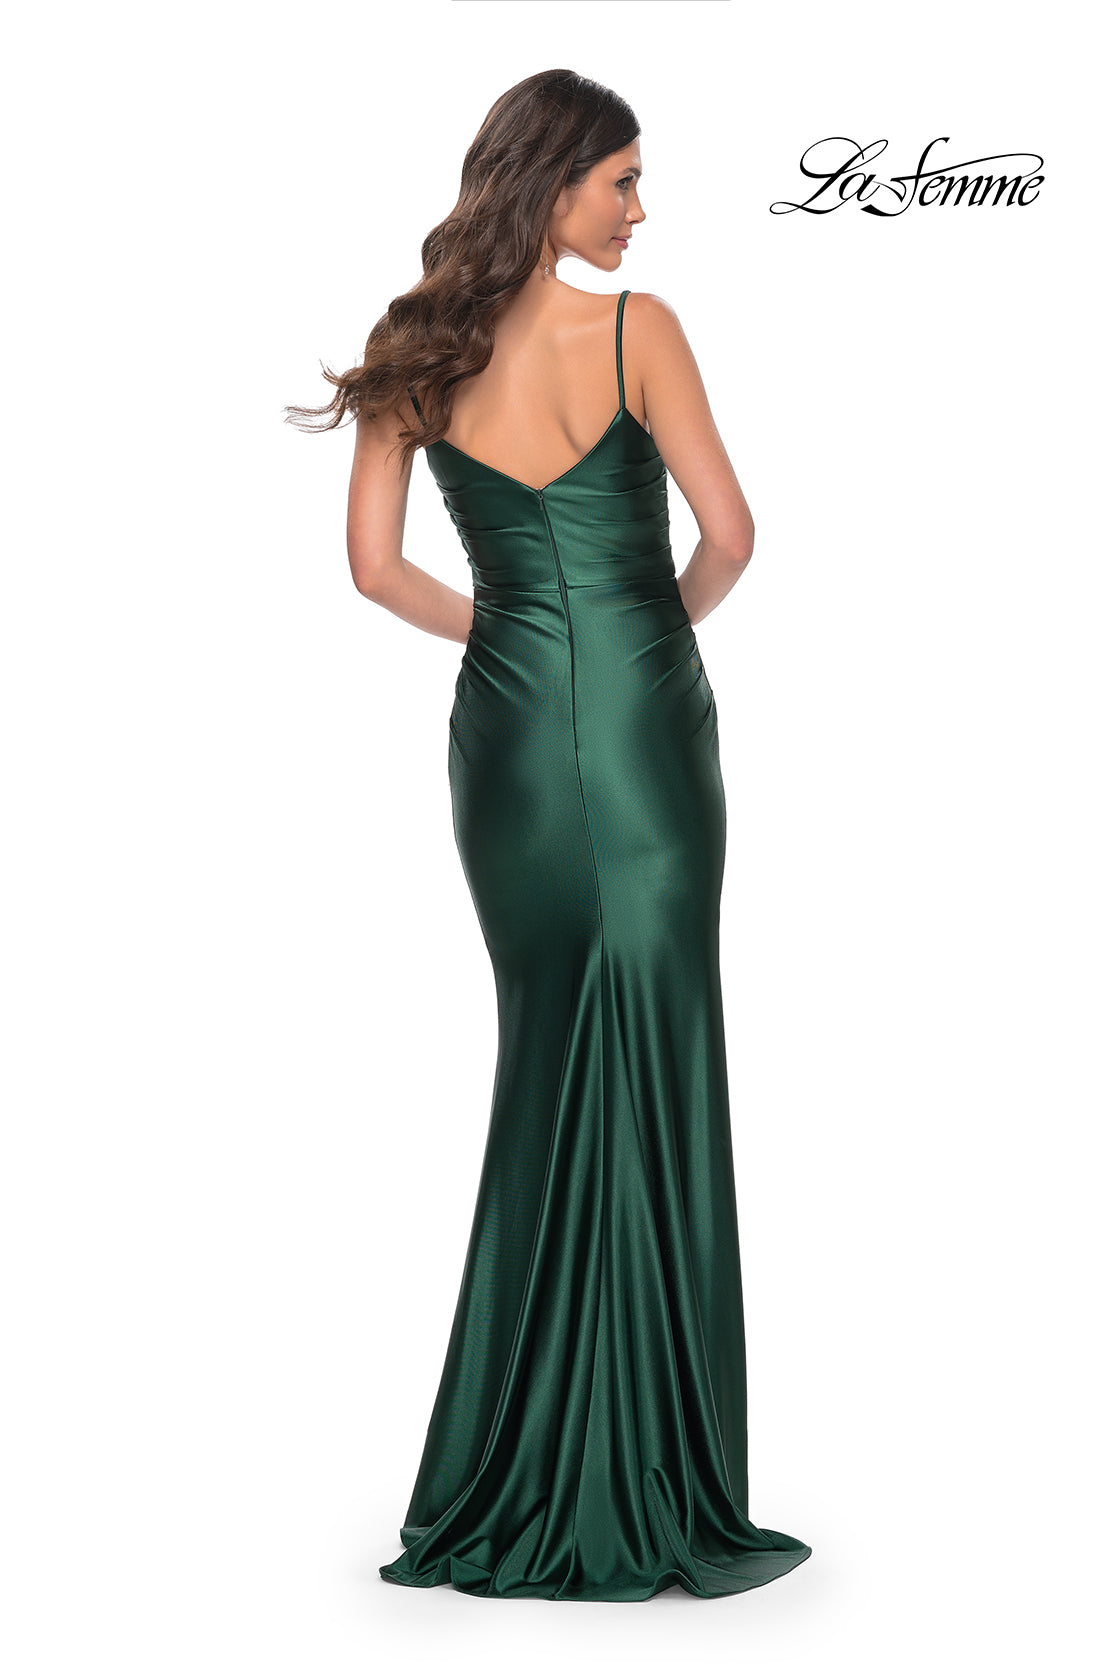 La-Femme-32075-V-Neck-Neckline-Zipper-Back-Plain-Liquid-Jersey-Column-Dark-Emerald-Evening-Dress-B-Chic-Fashions-Prom-Dress